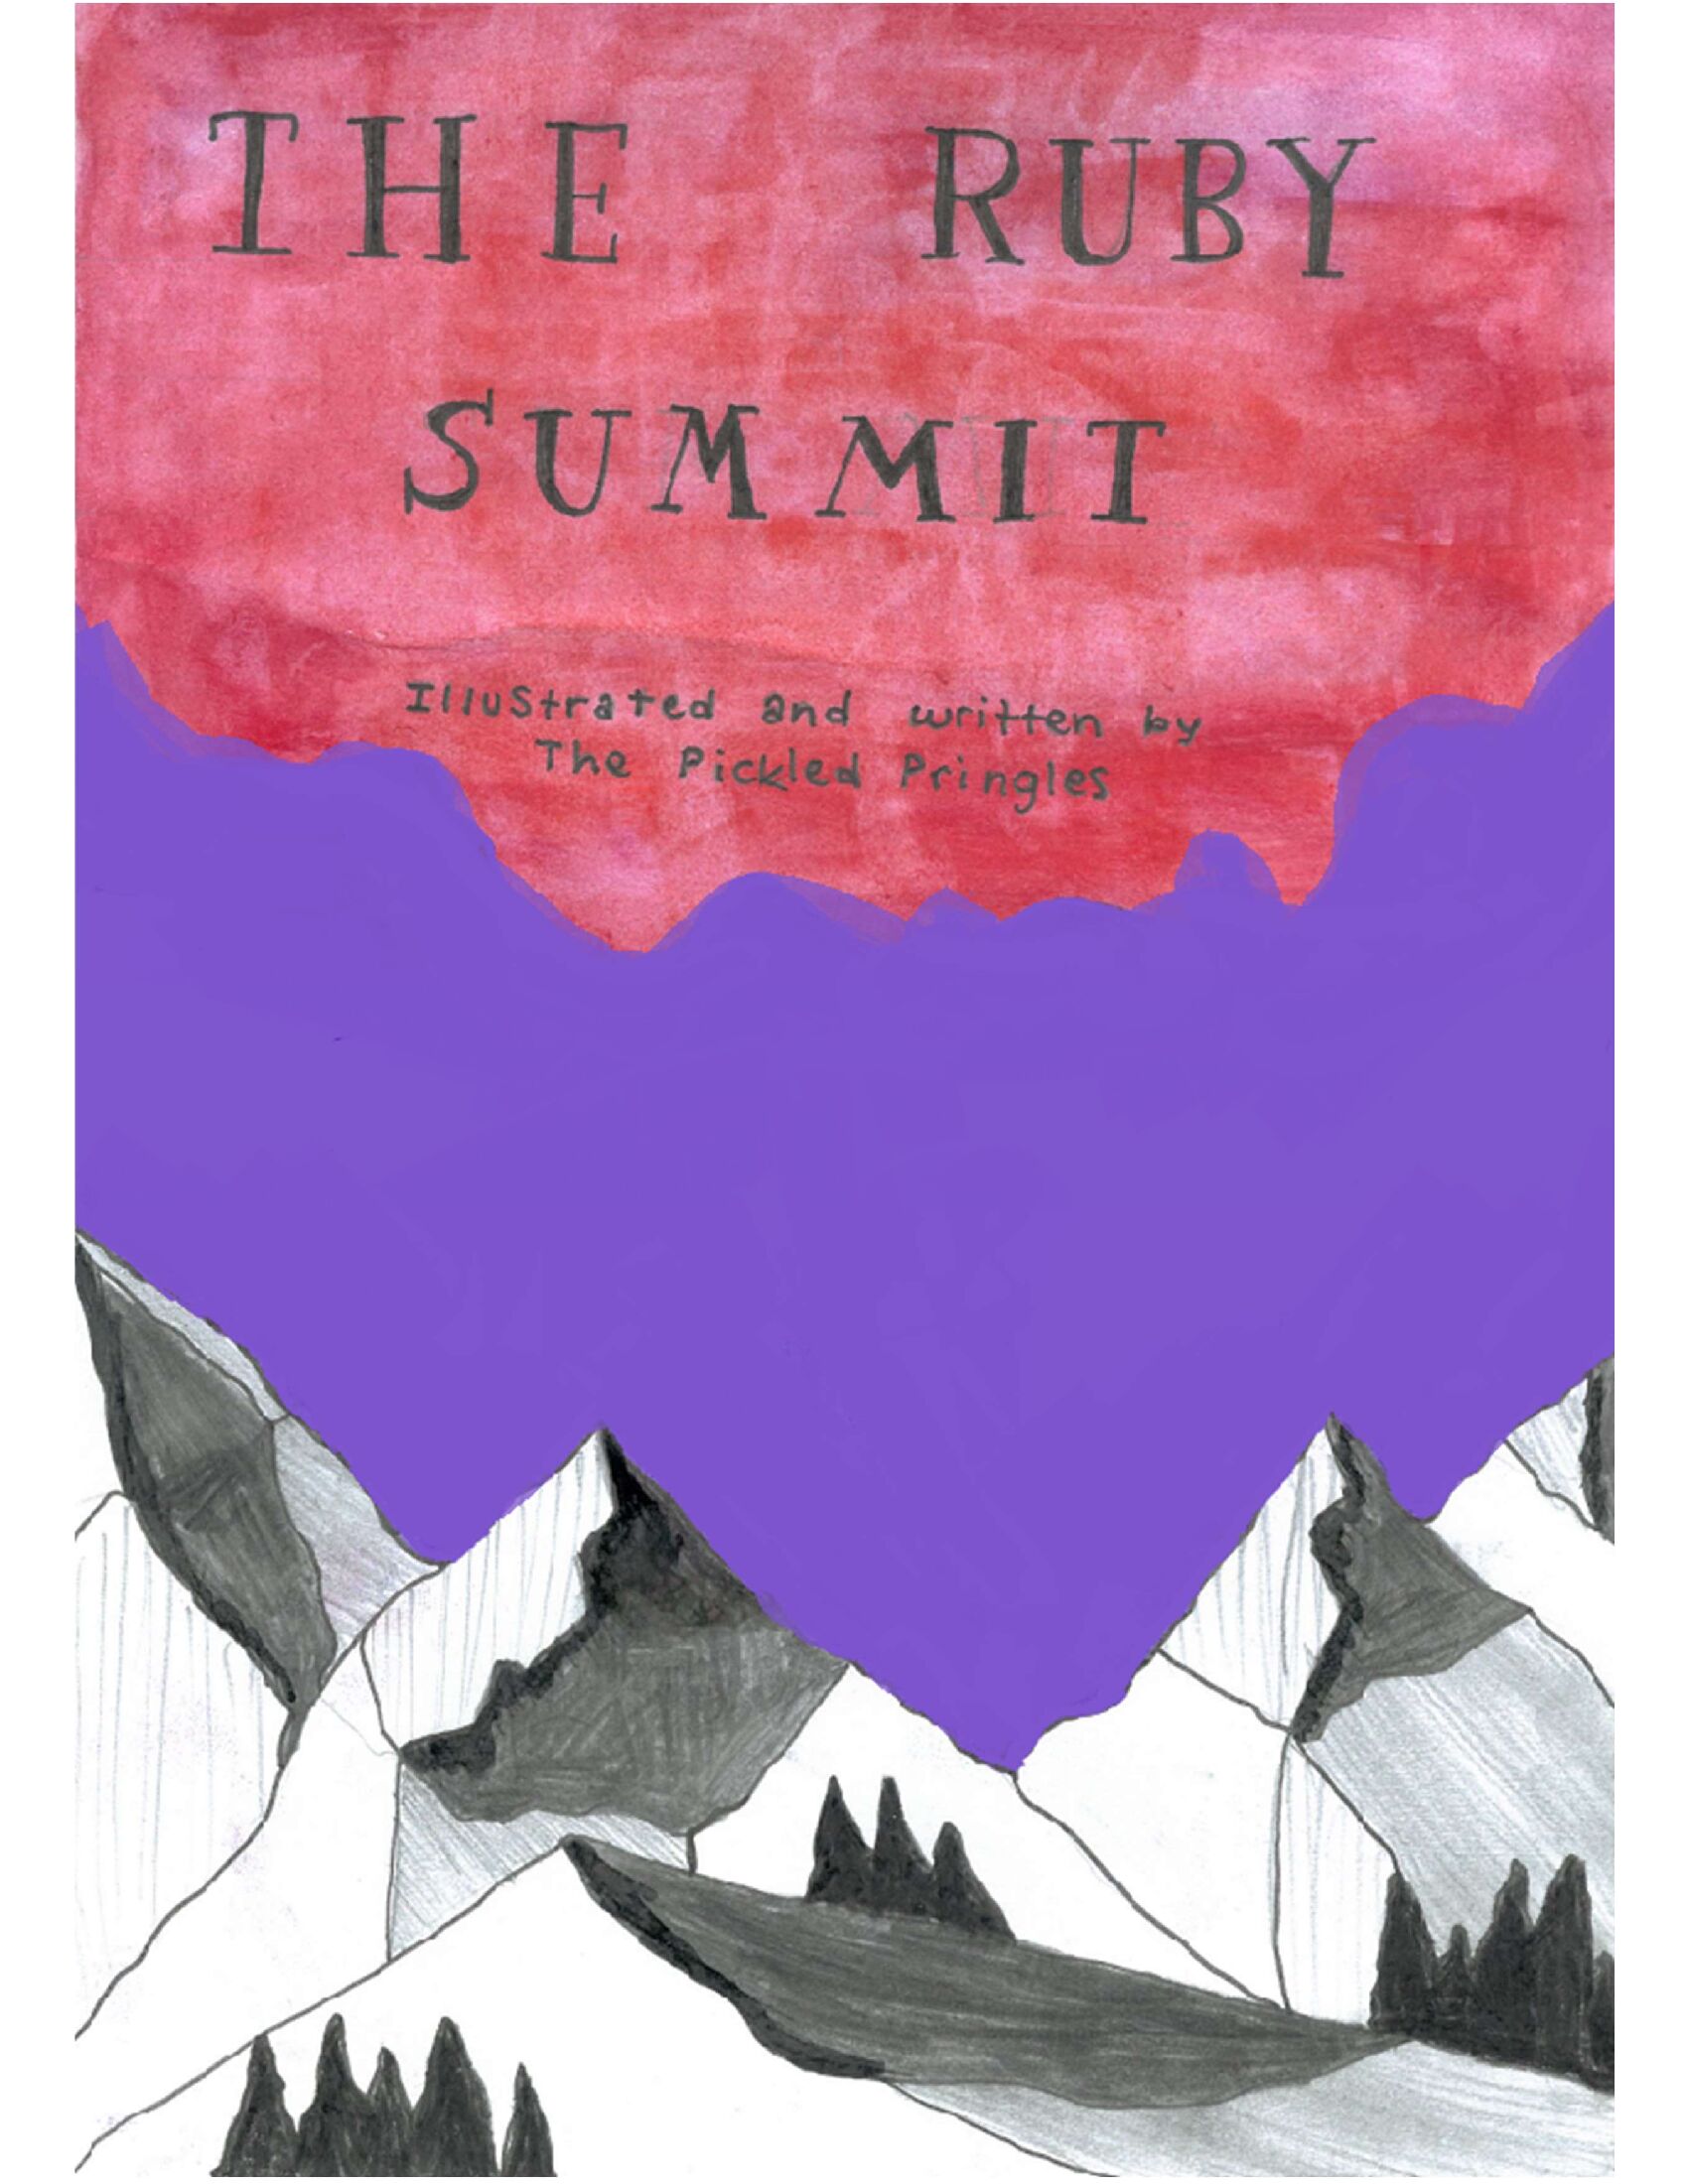 The Ruby Summit